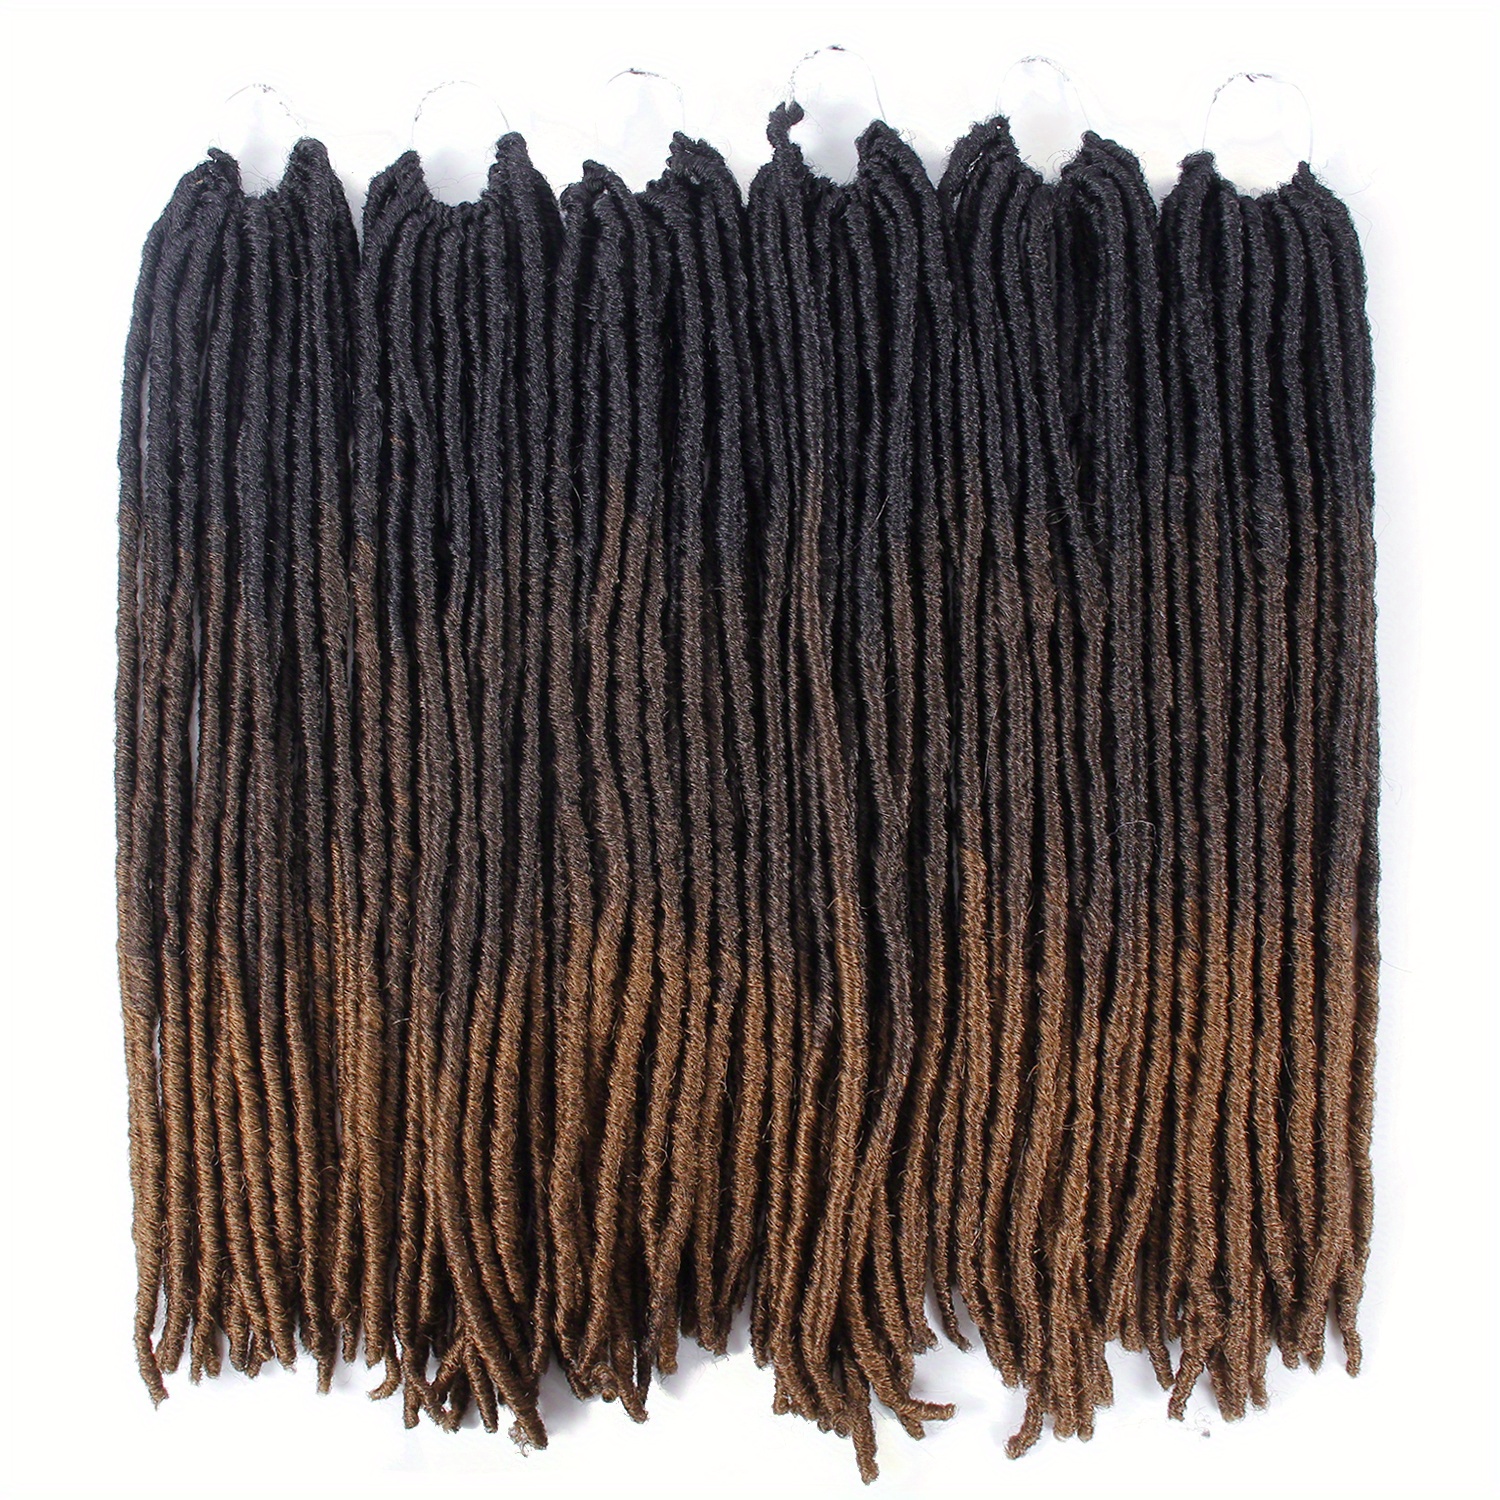 Strands Synthetic Handmade Dreadlocks Hair Dreads Extensions Hair Extension  Braiding Hair Ombre Crochet Hooks Soft Dread Locs Crochet Braid From  Weavesclosure, $0.75